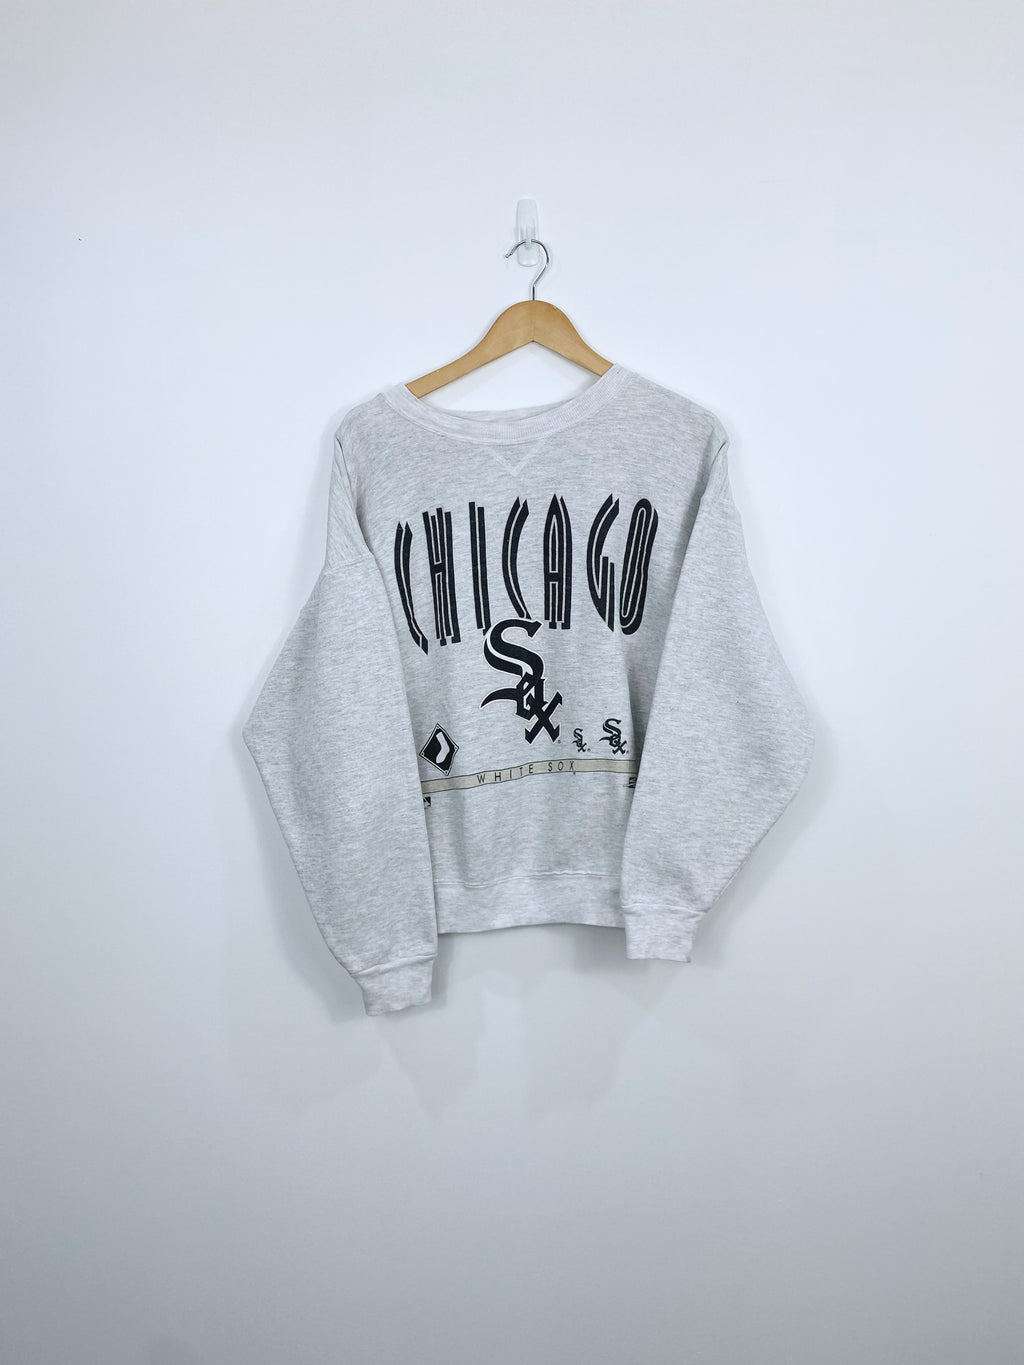 Vintage Chicago White Sox Sweatshirt L